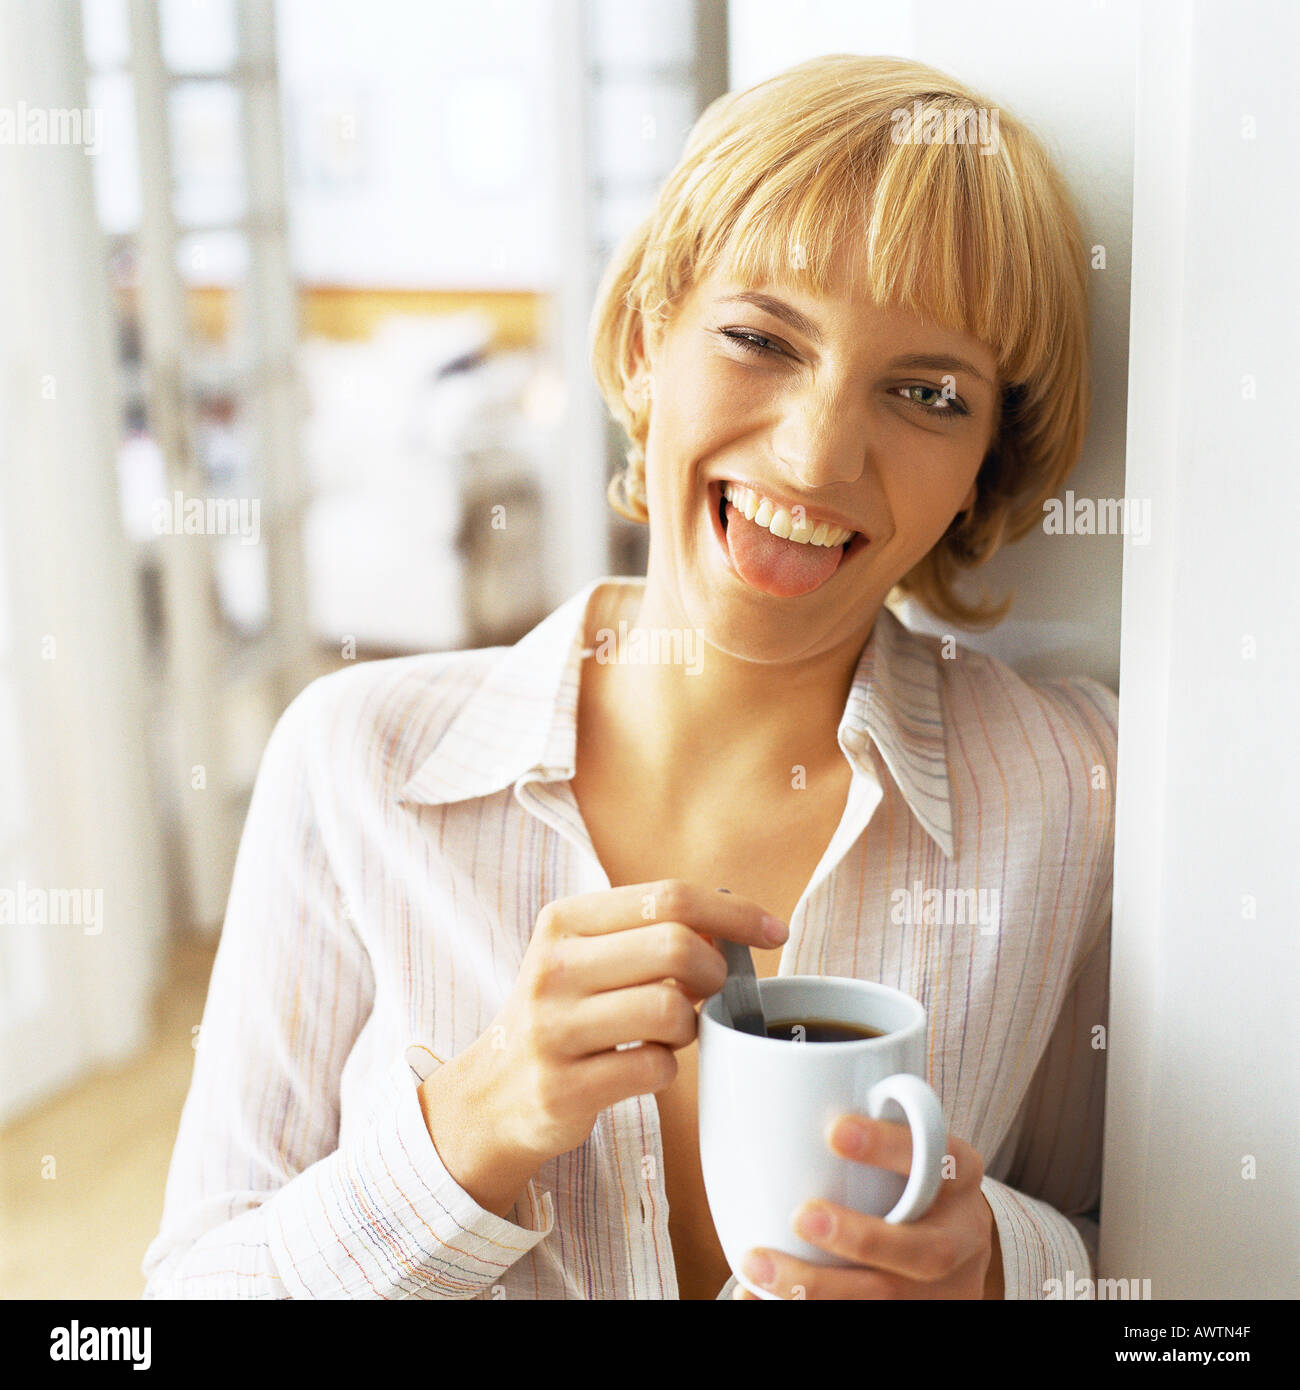 Teen girl holding tasse de café, sticking tongue out at camera Banque D'Images